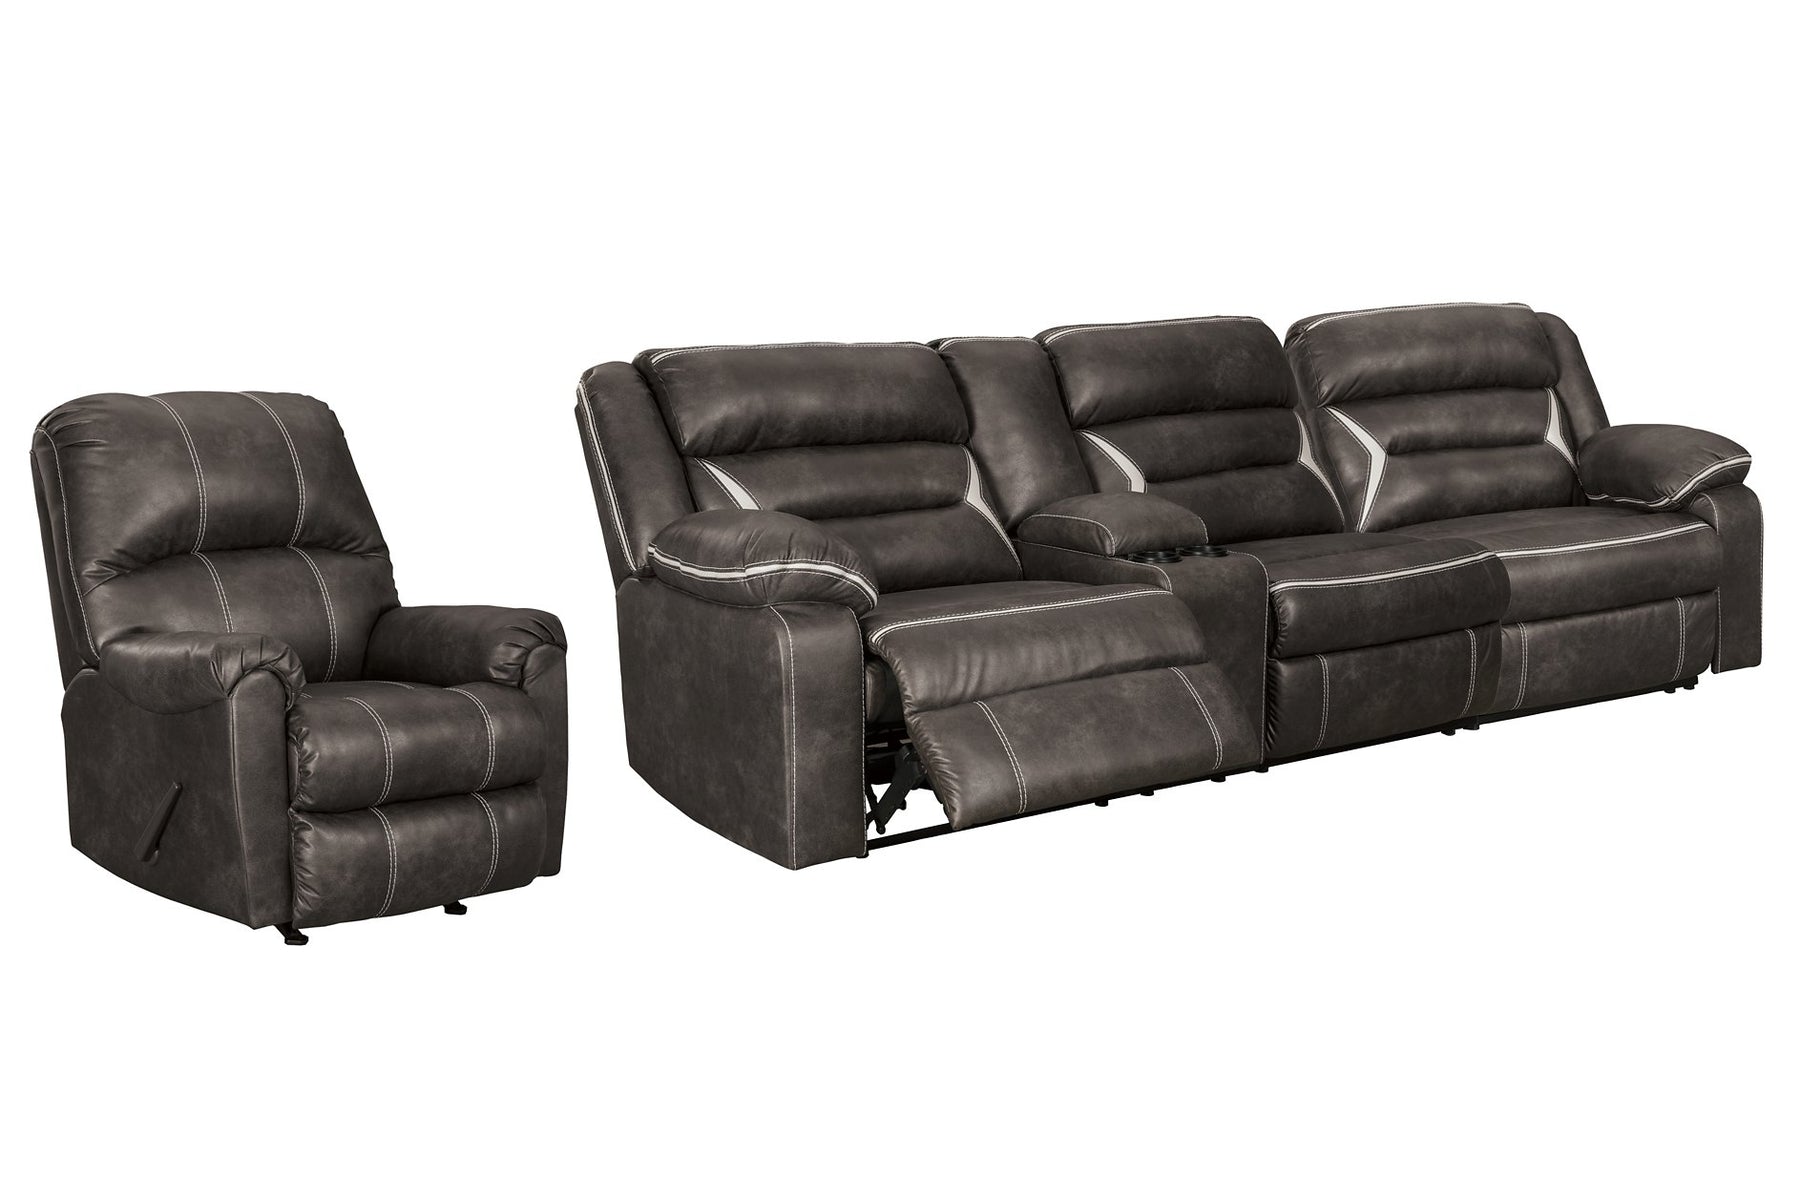 Kincord Living Room Set - Half Price Furniture